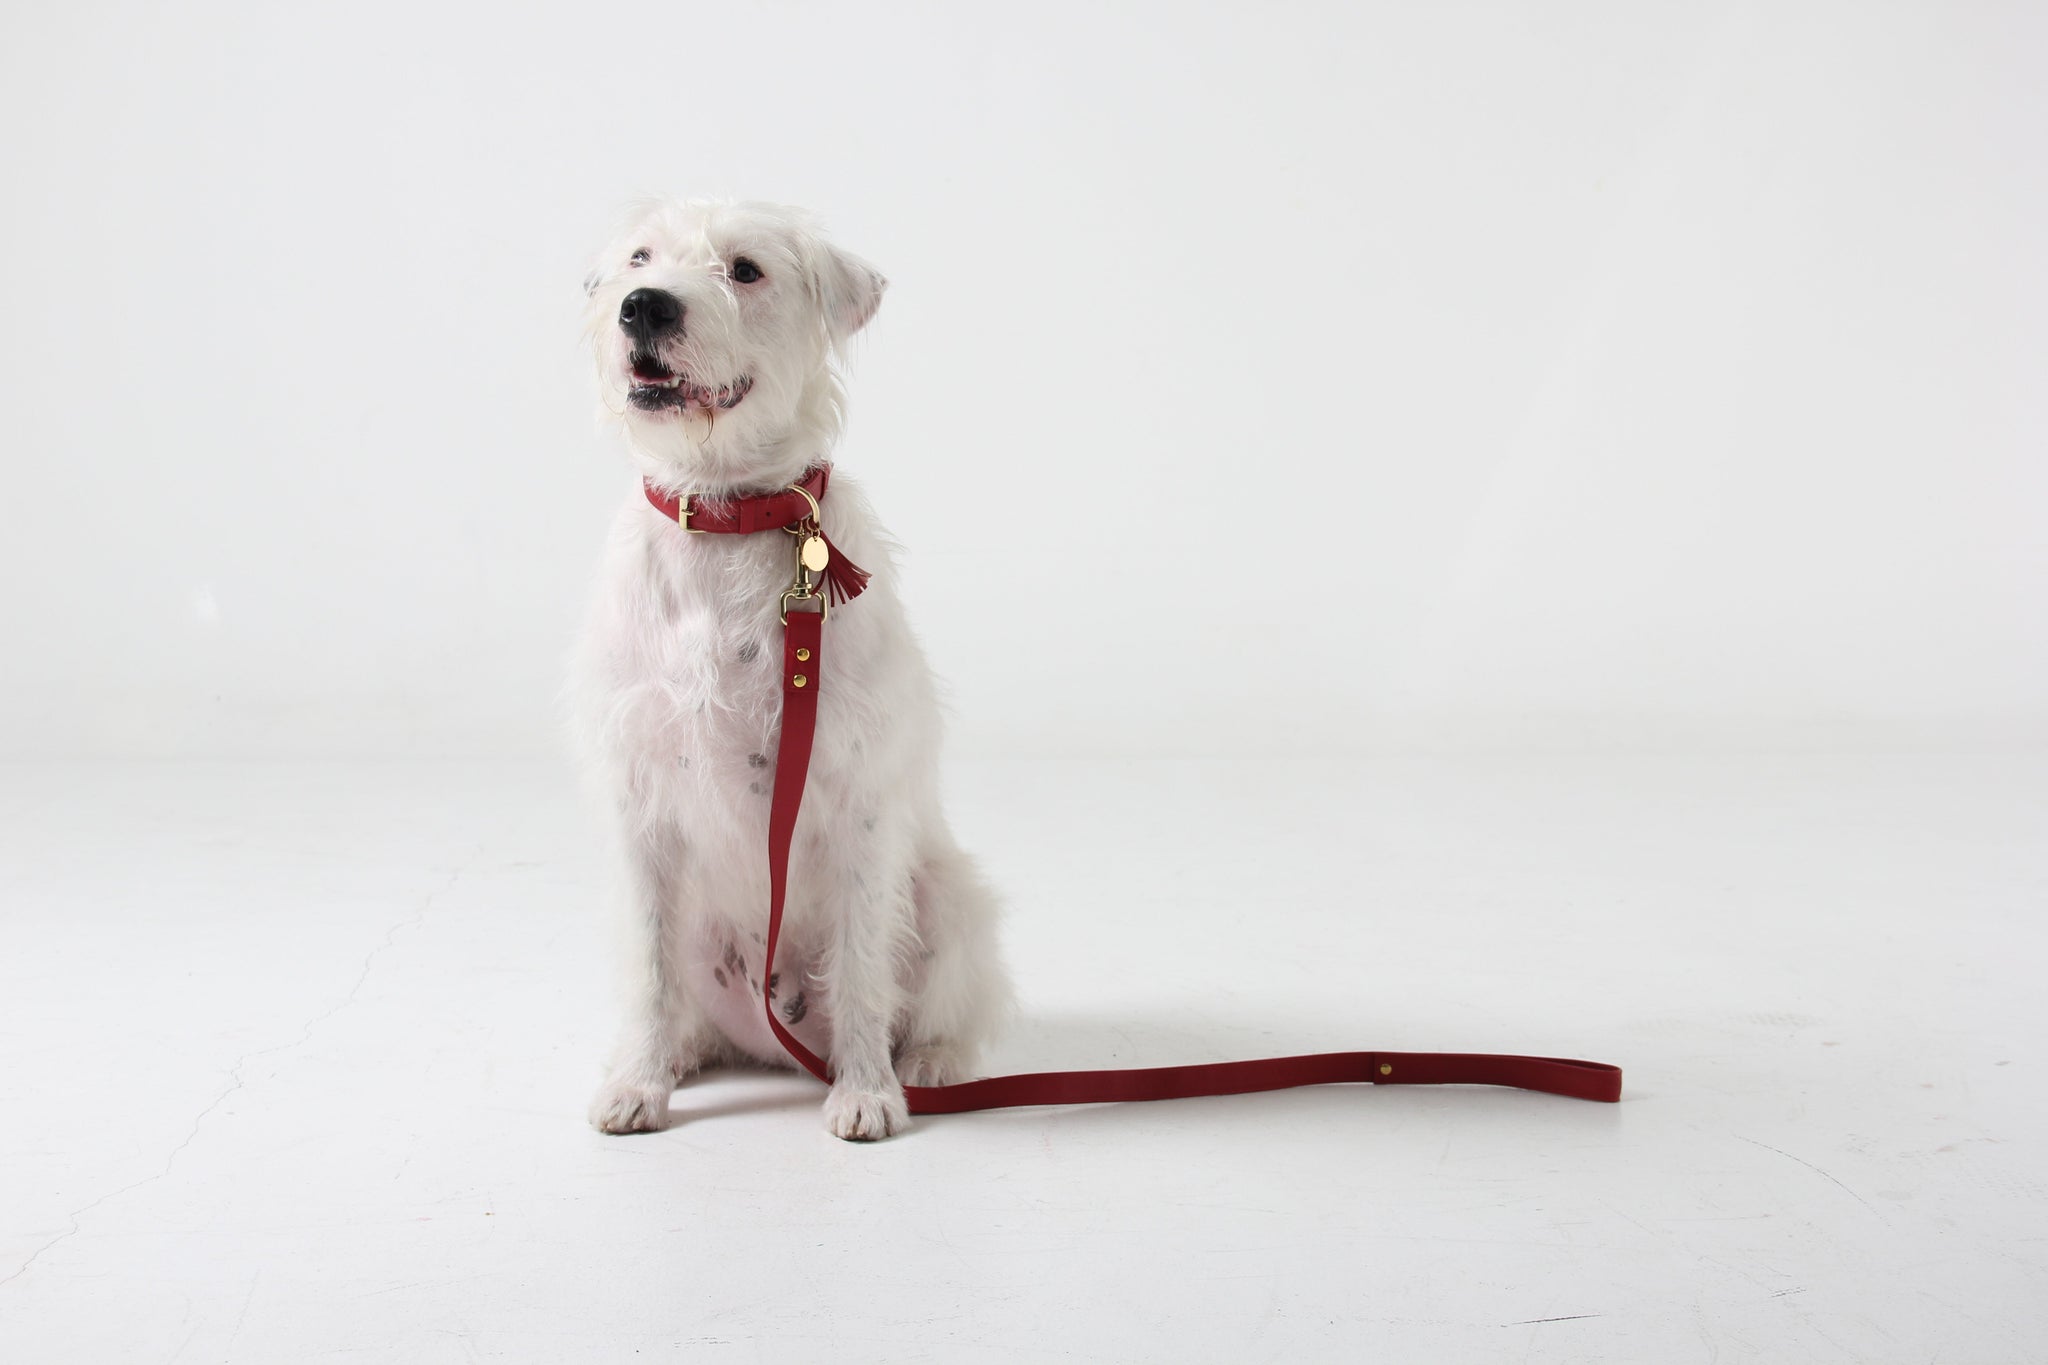 Scarlet red leather dog leash